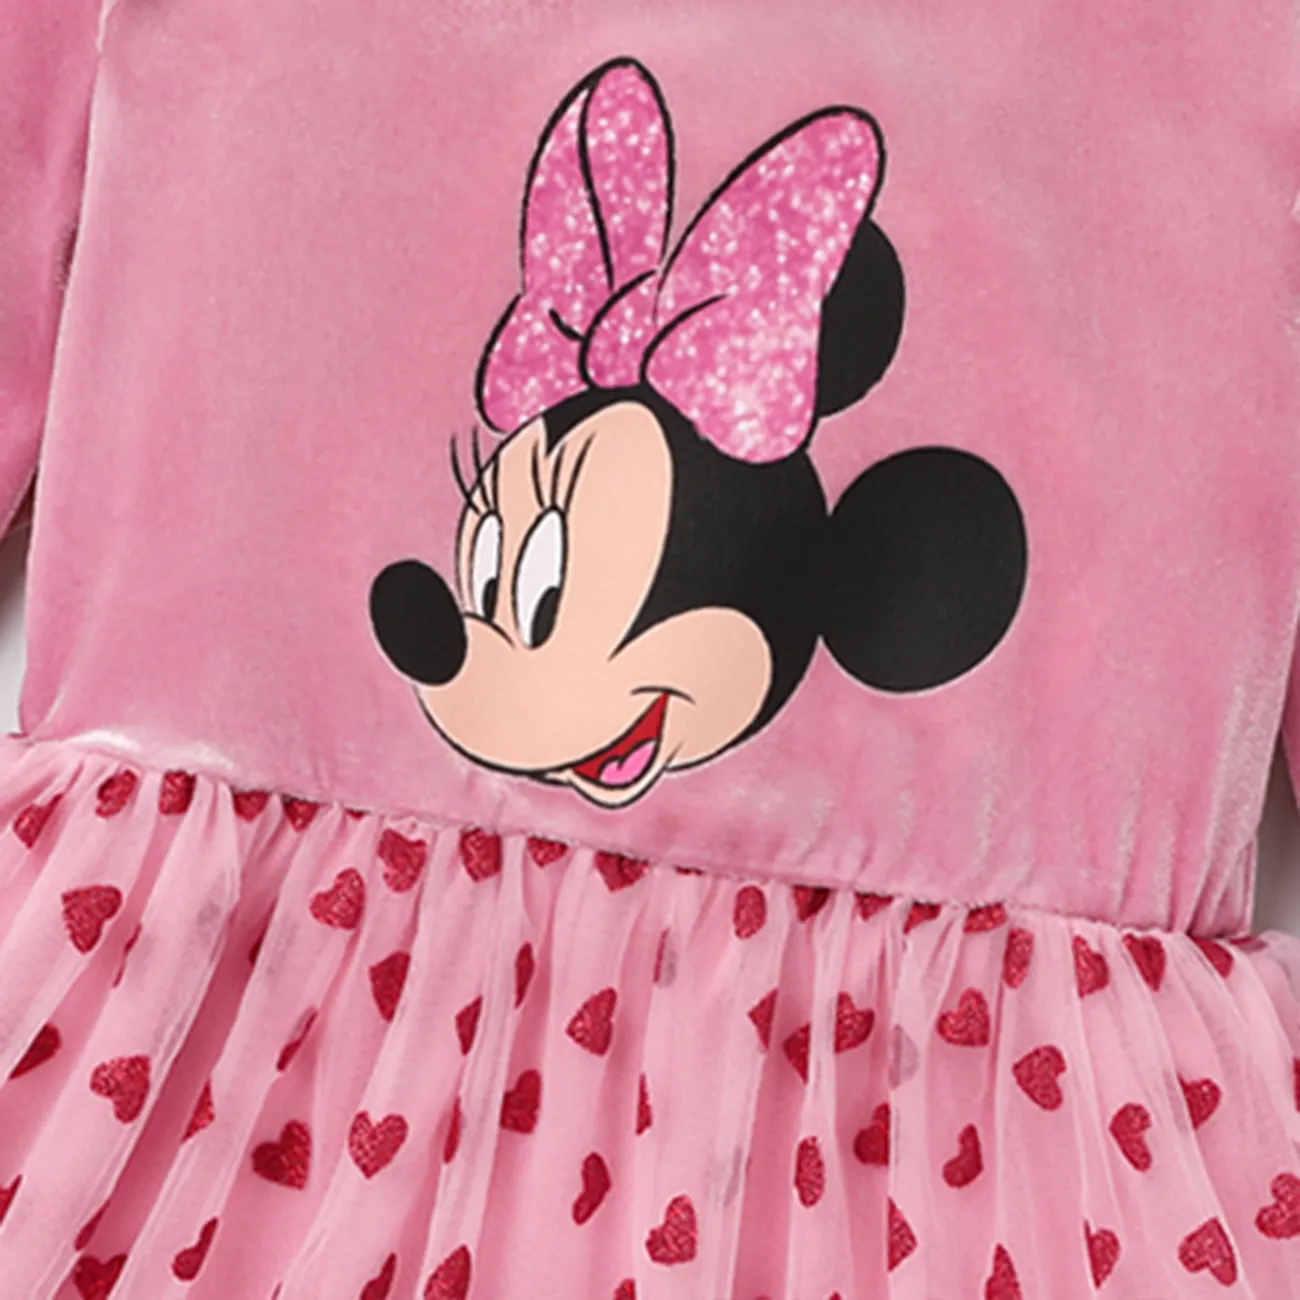 Disney Mickey and Friends Toddler Girl Heart print Flutter-sleeve Mesh Dress Pink big image 1